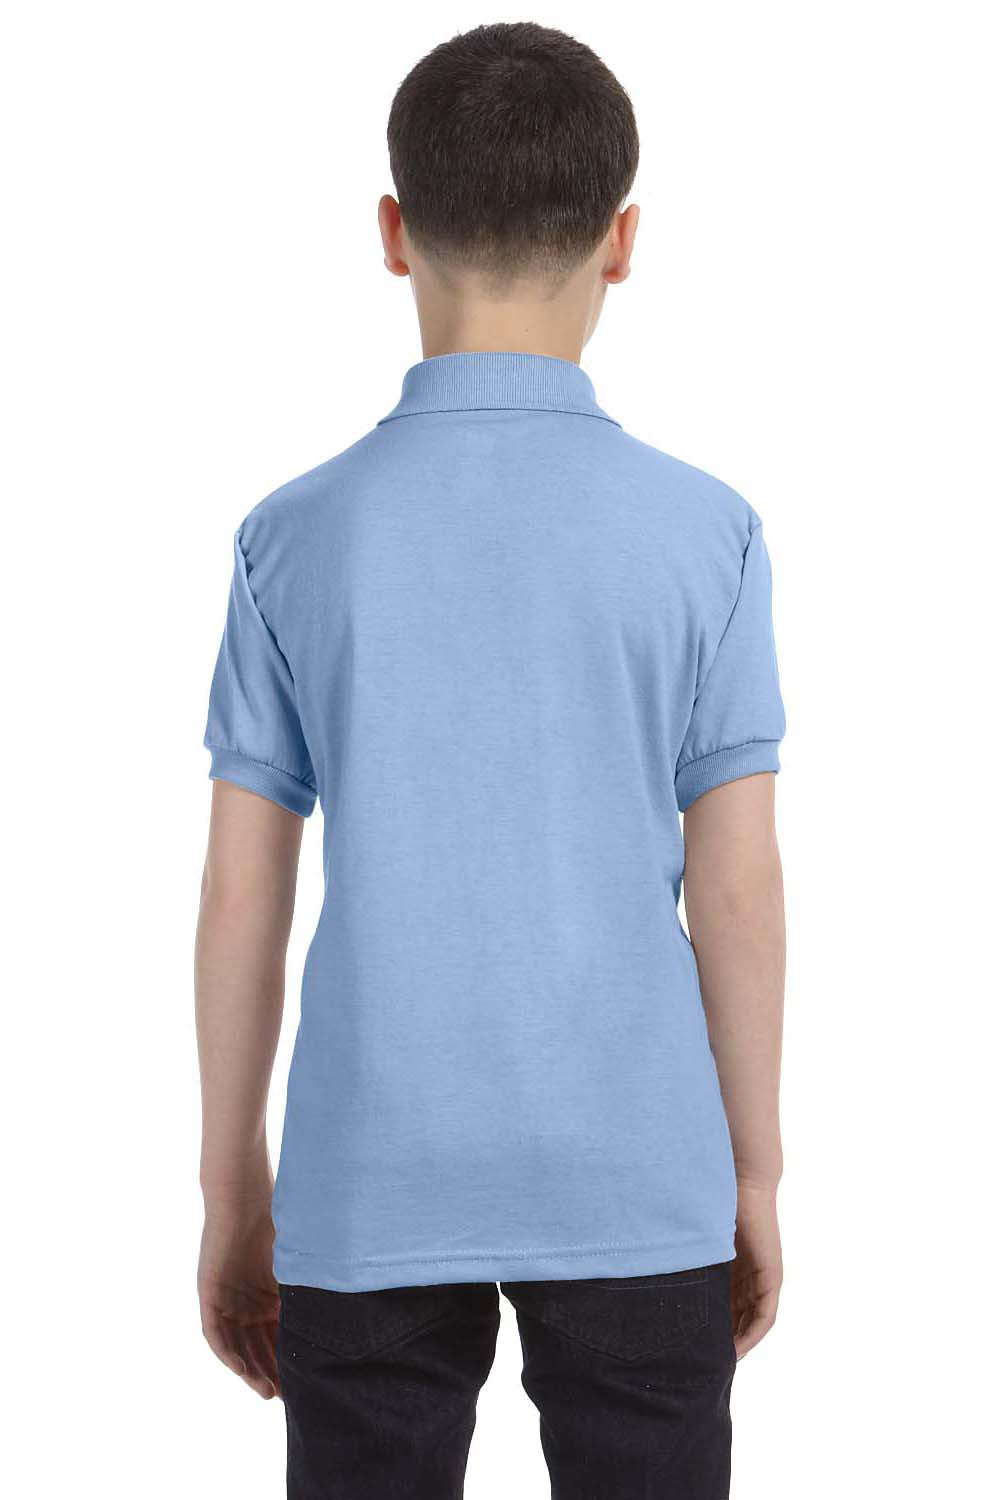 Hanes 054Y Youth EcoSmart Short Sleeve Polo Shirt Light Blue Back